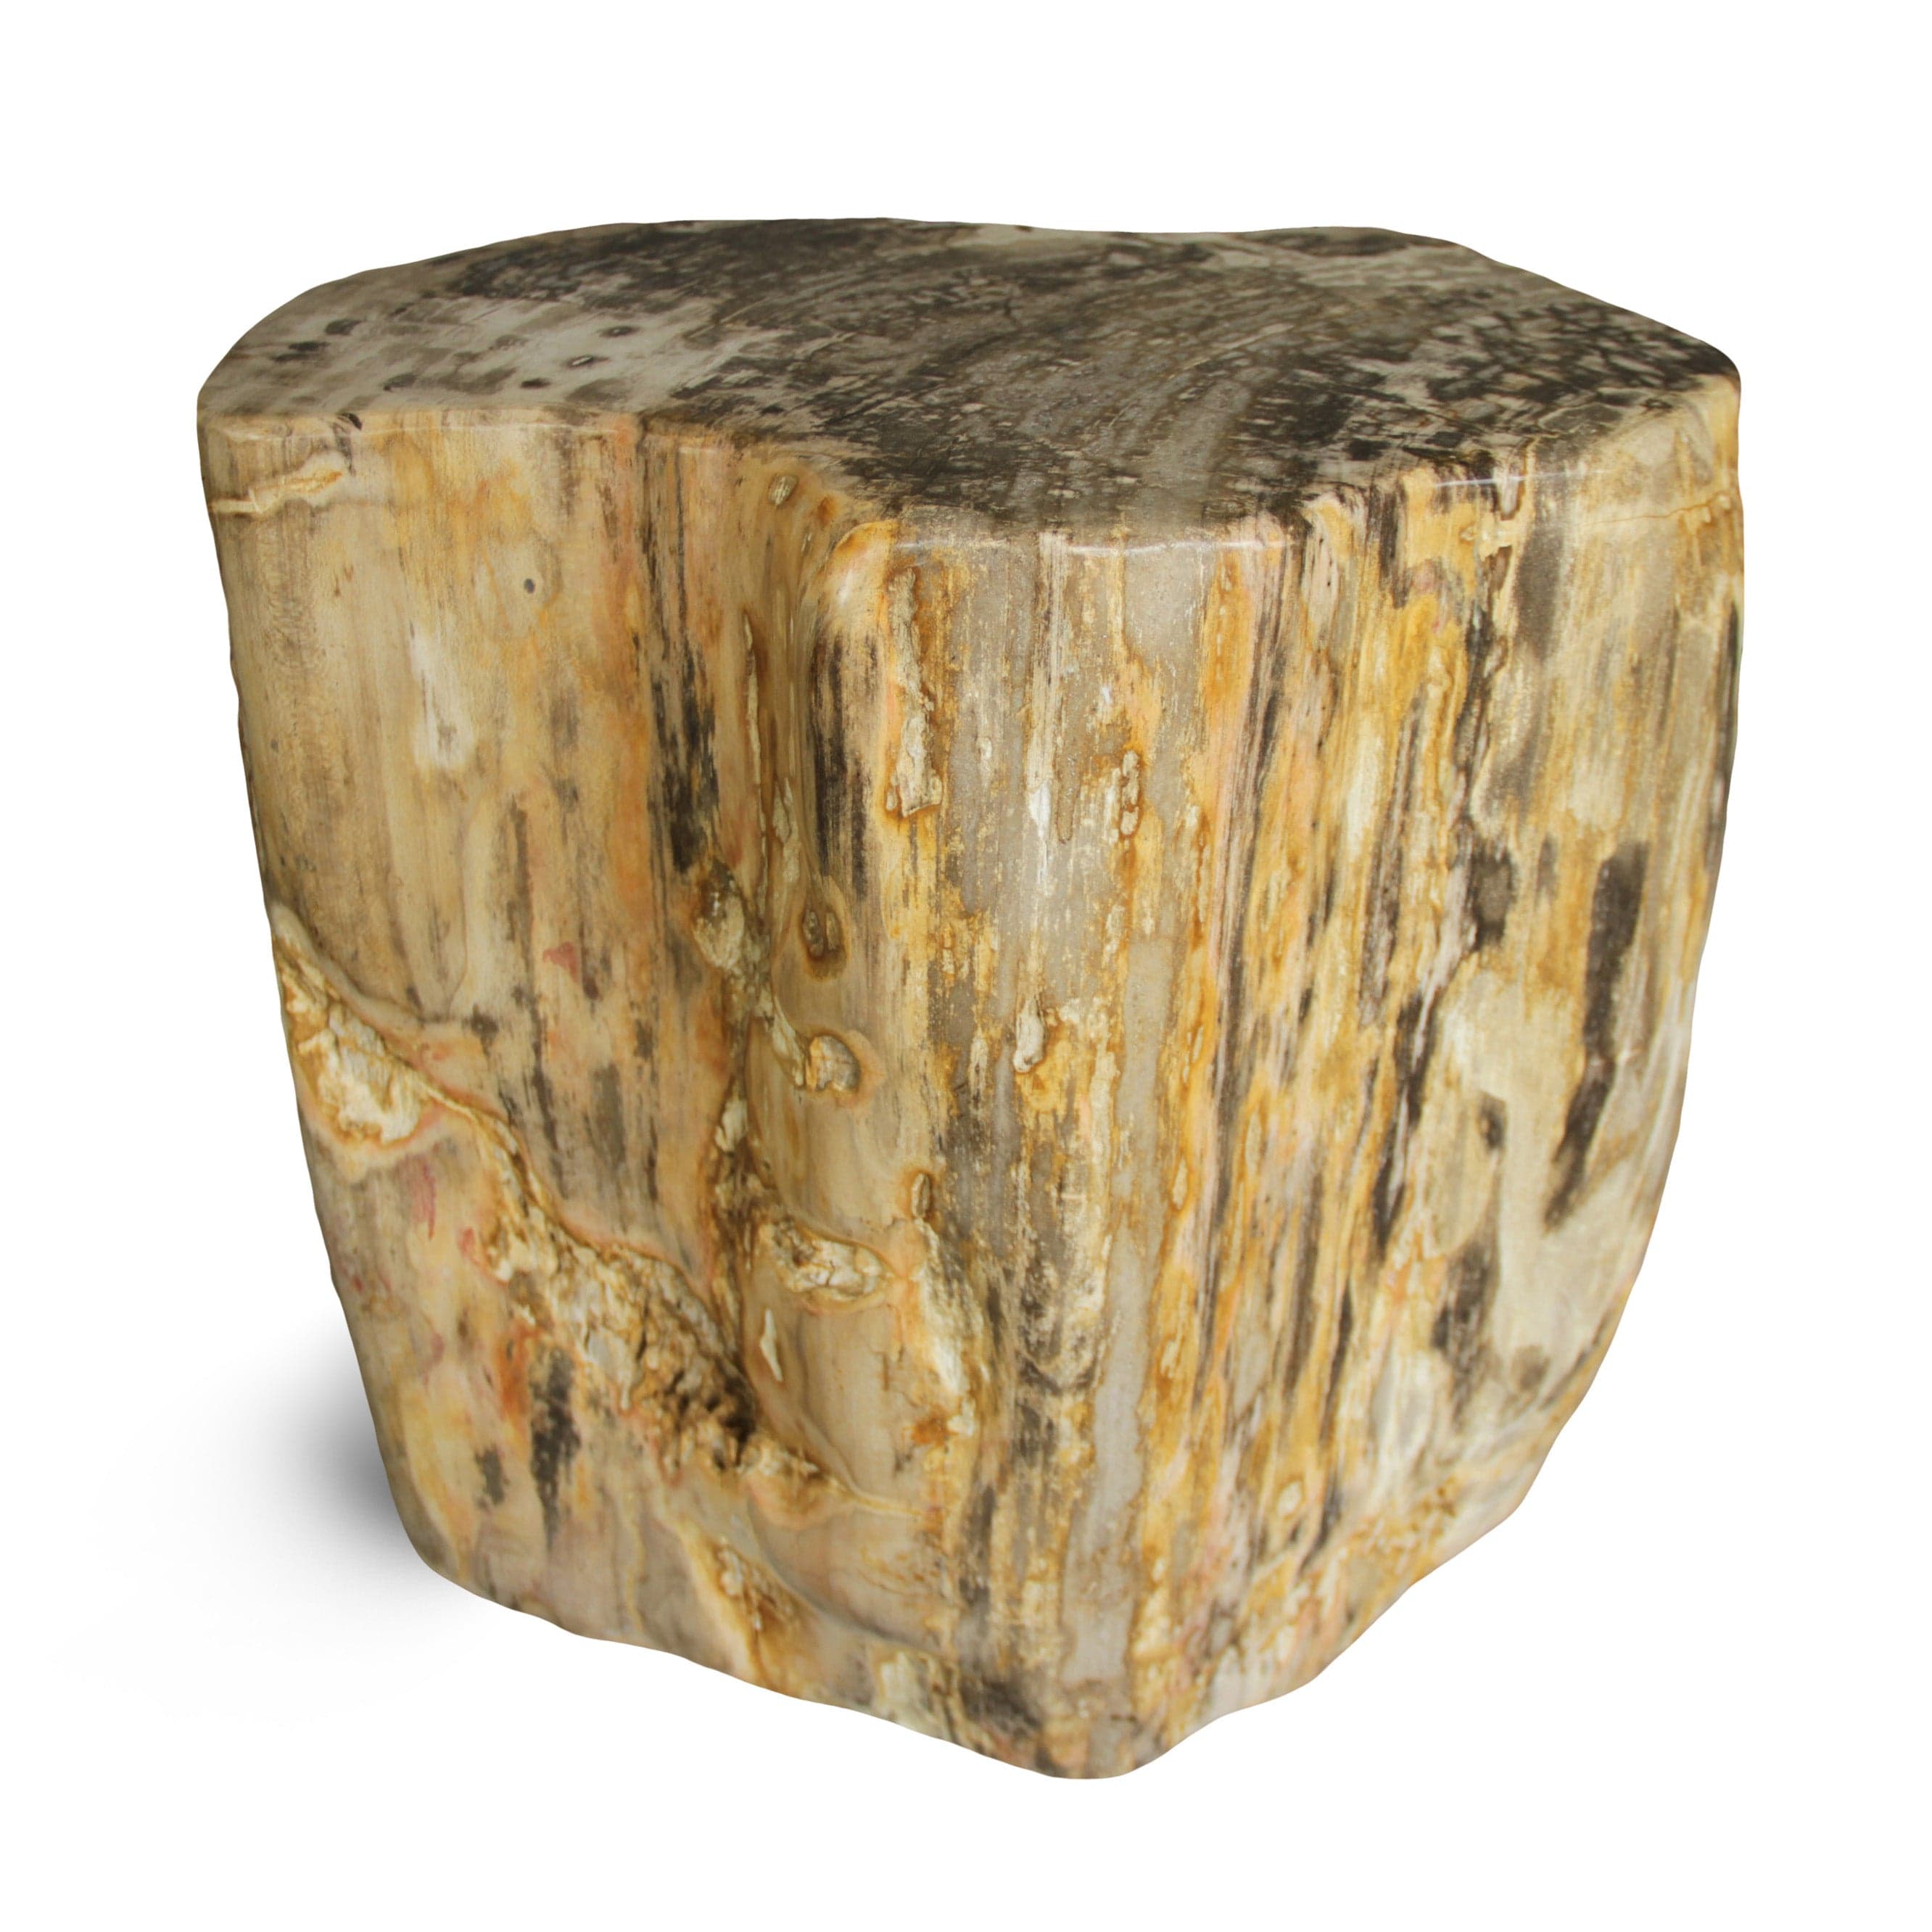 Kalifano Petrified Wood Petrified Wood Round Stump / Stool from Indonesia - 18" / 286 lbs PWS5200.003